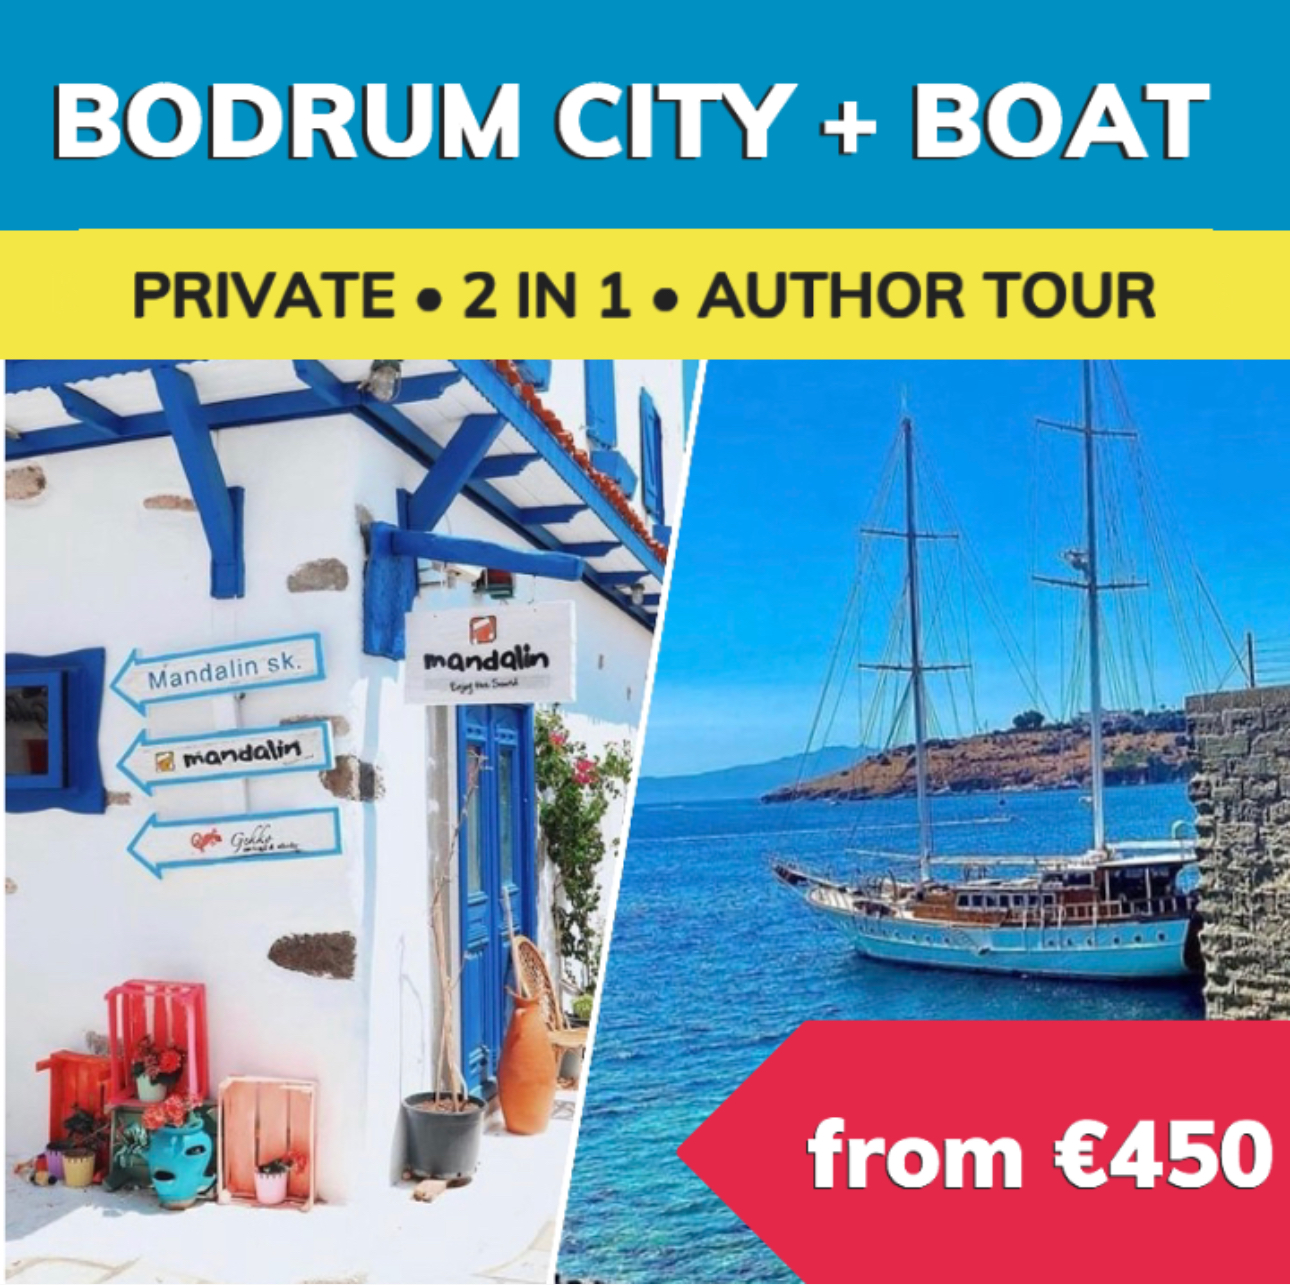 Bodrum City + Boat Tour